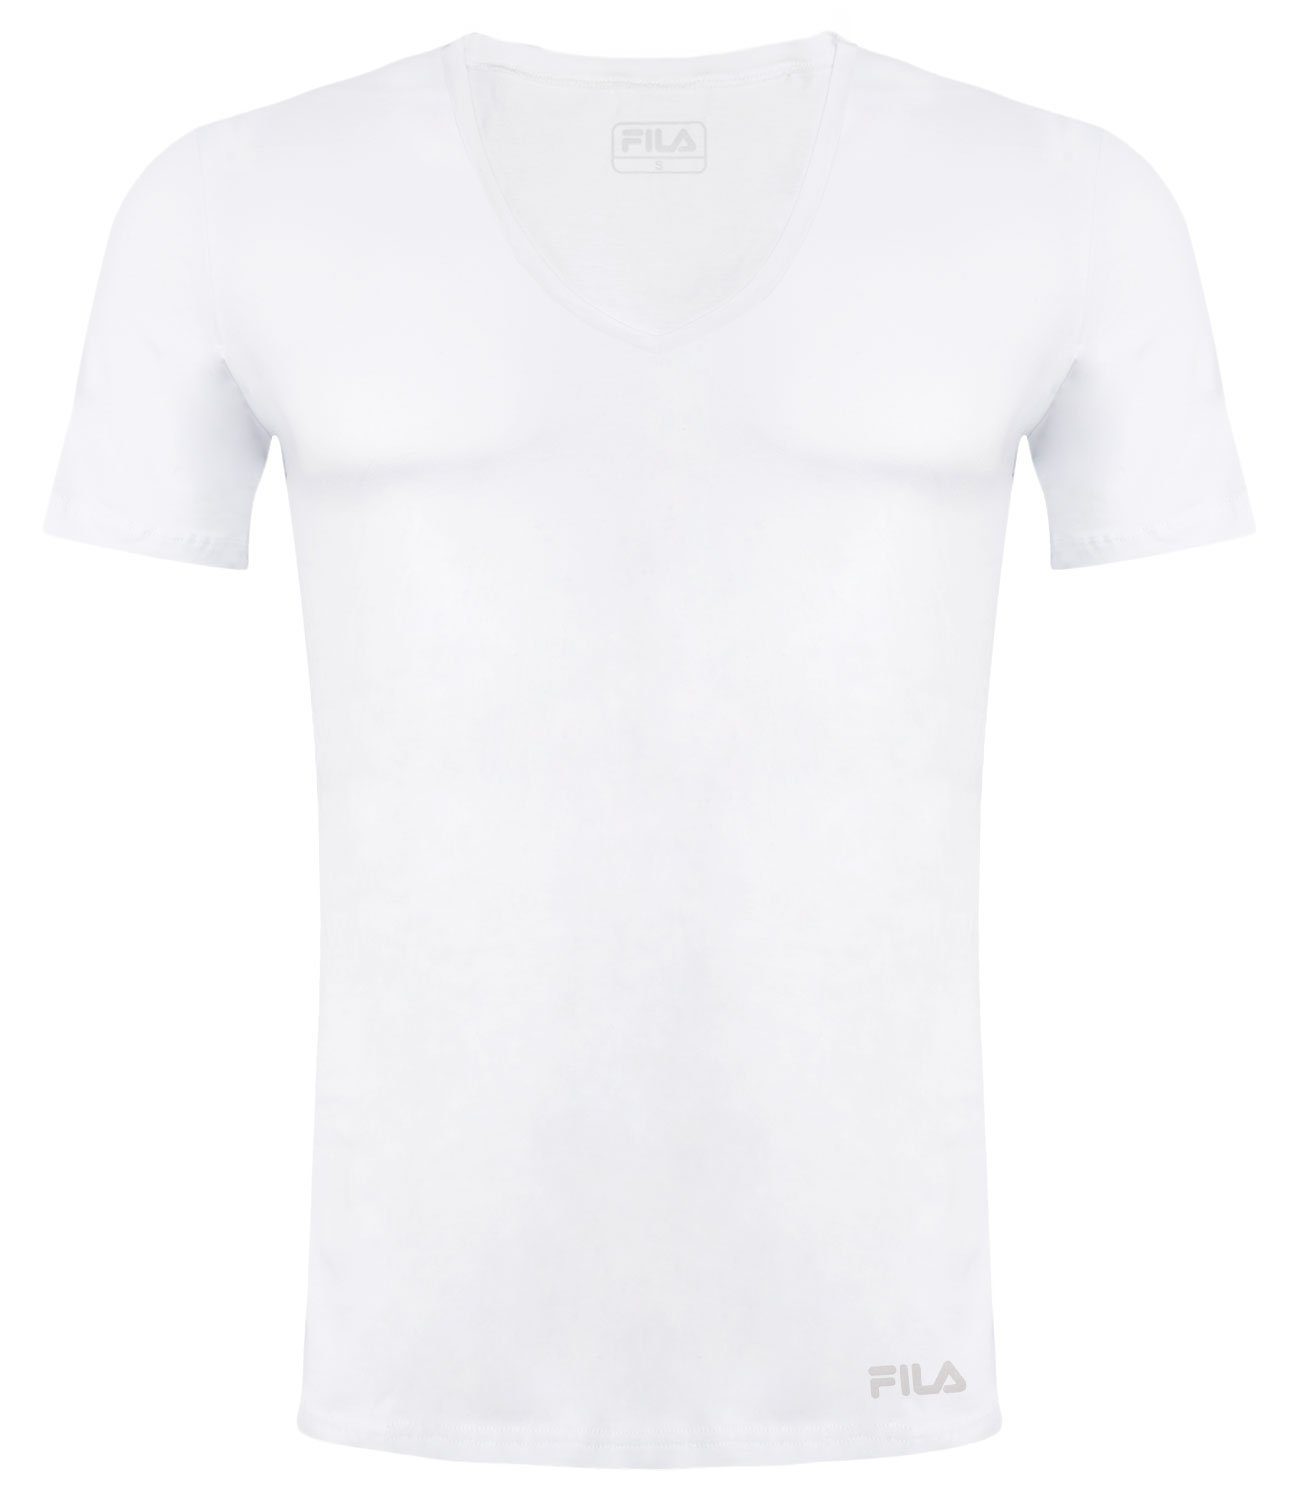 Fila T-Shirt 300 Baumwolljersey V-Neck aus weichem white